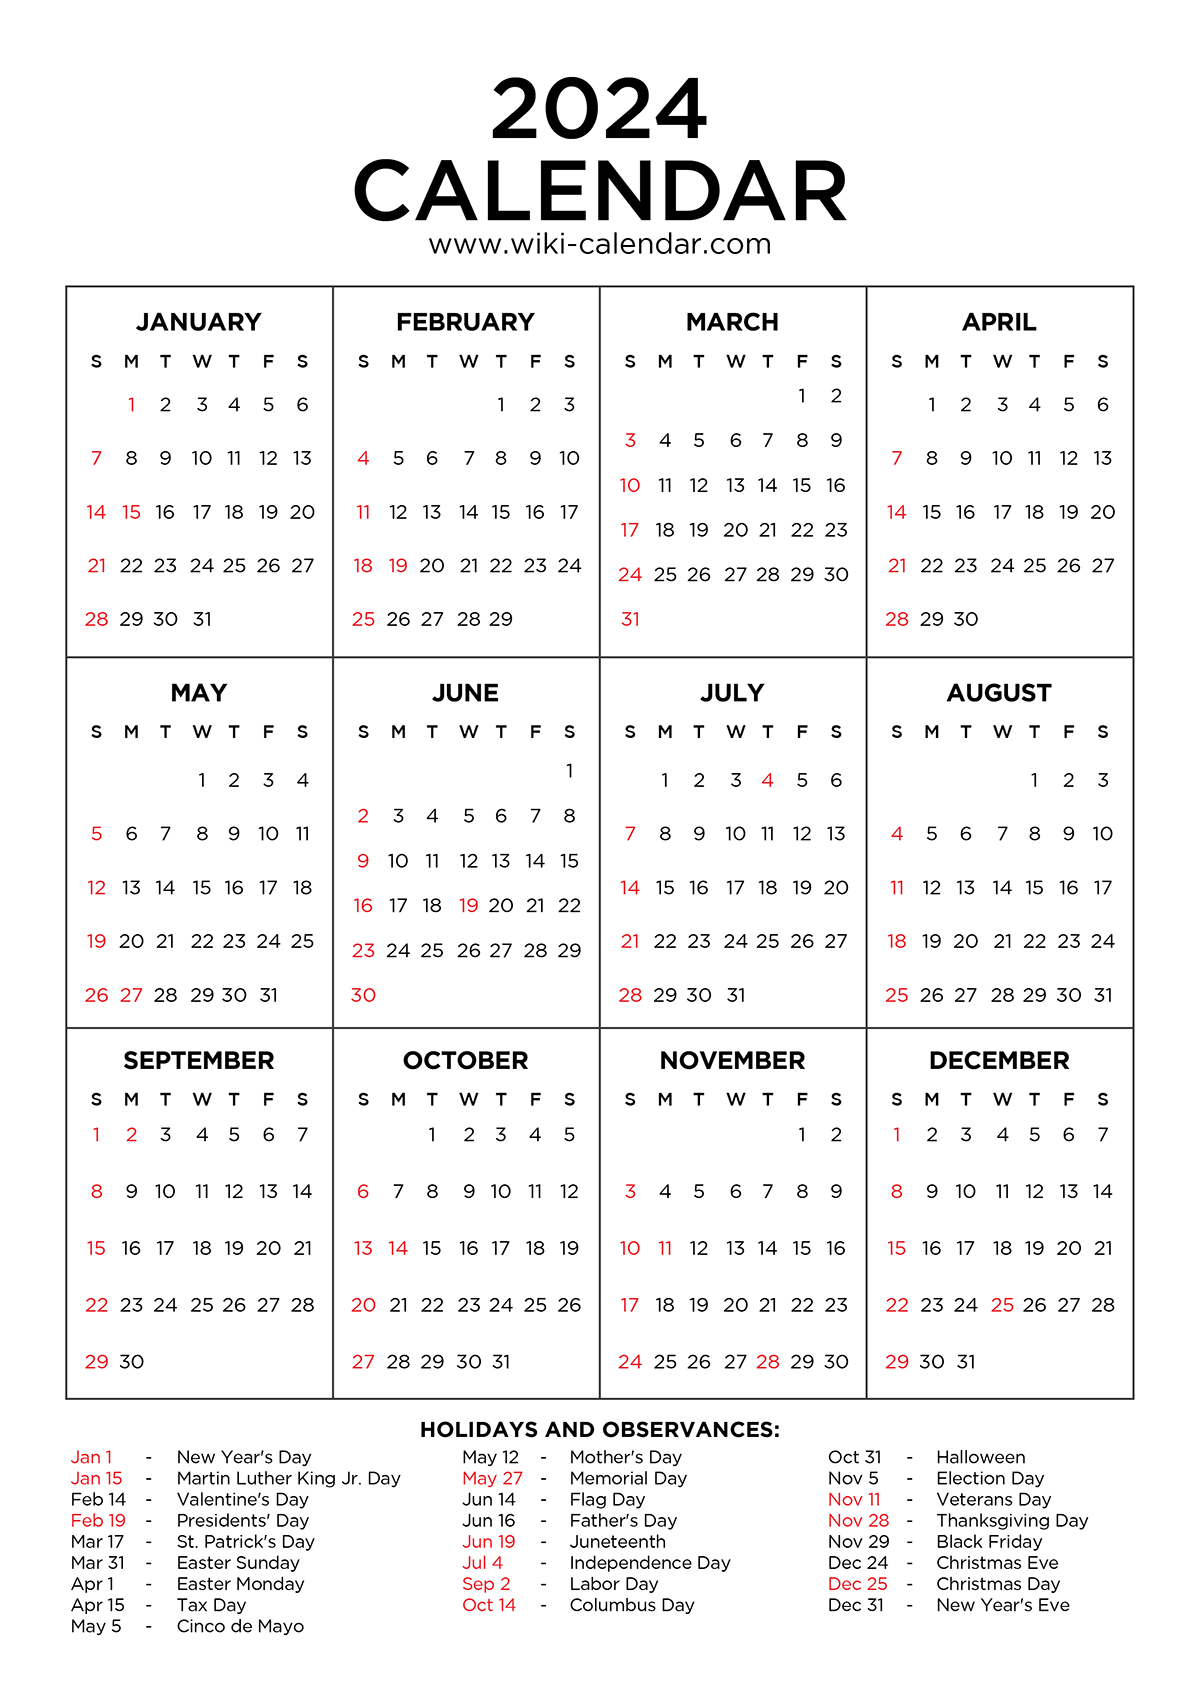 Year 2024 Calendar Printable With Holidays - Wiki Calendar in Free Printable Blank 2024 Calendar With Holidays